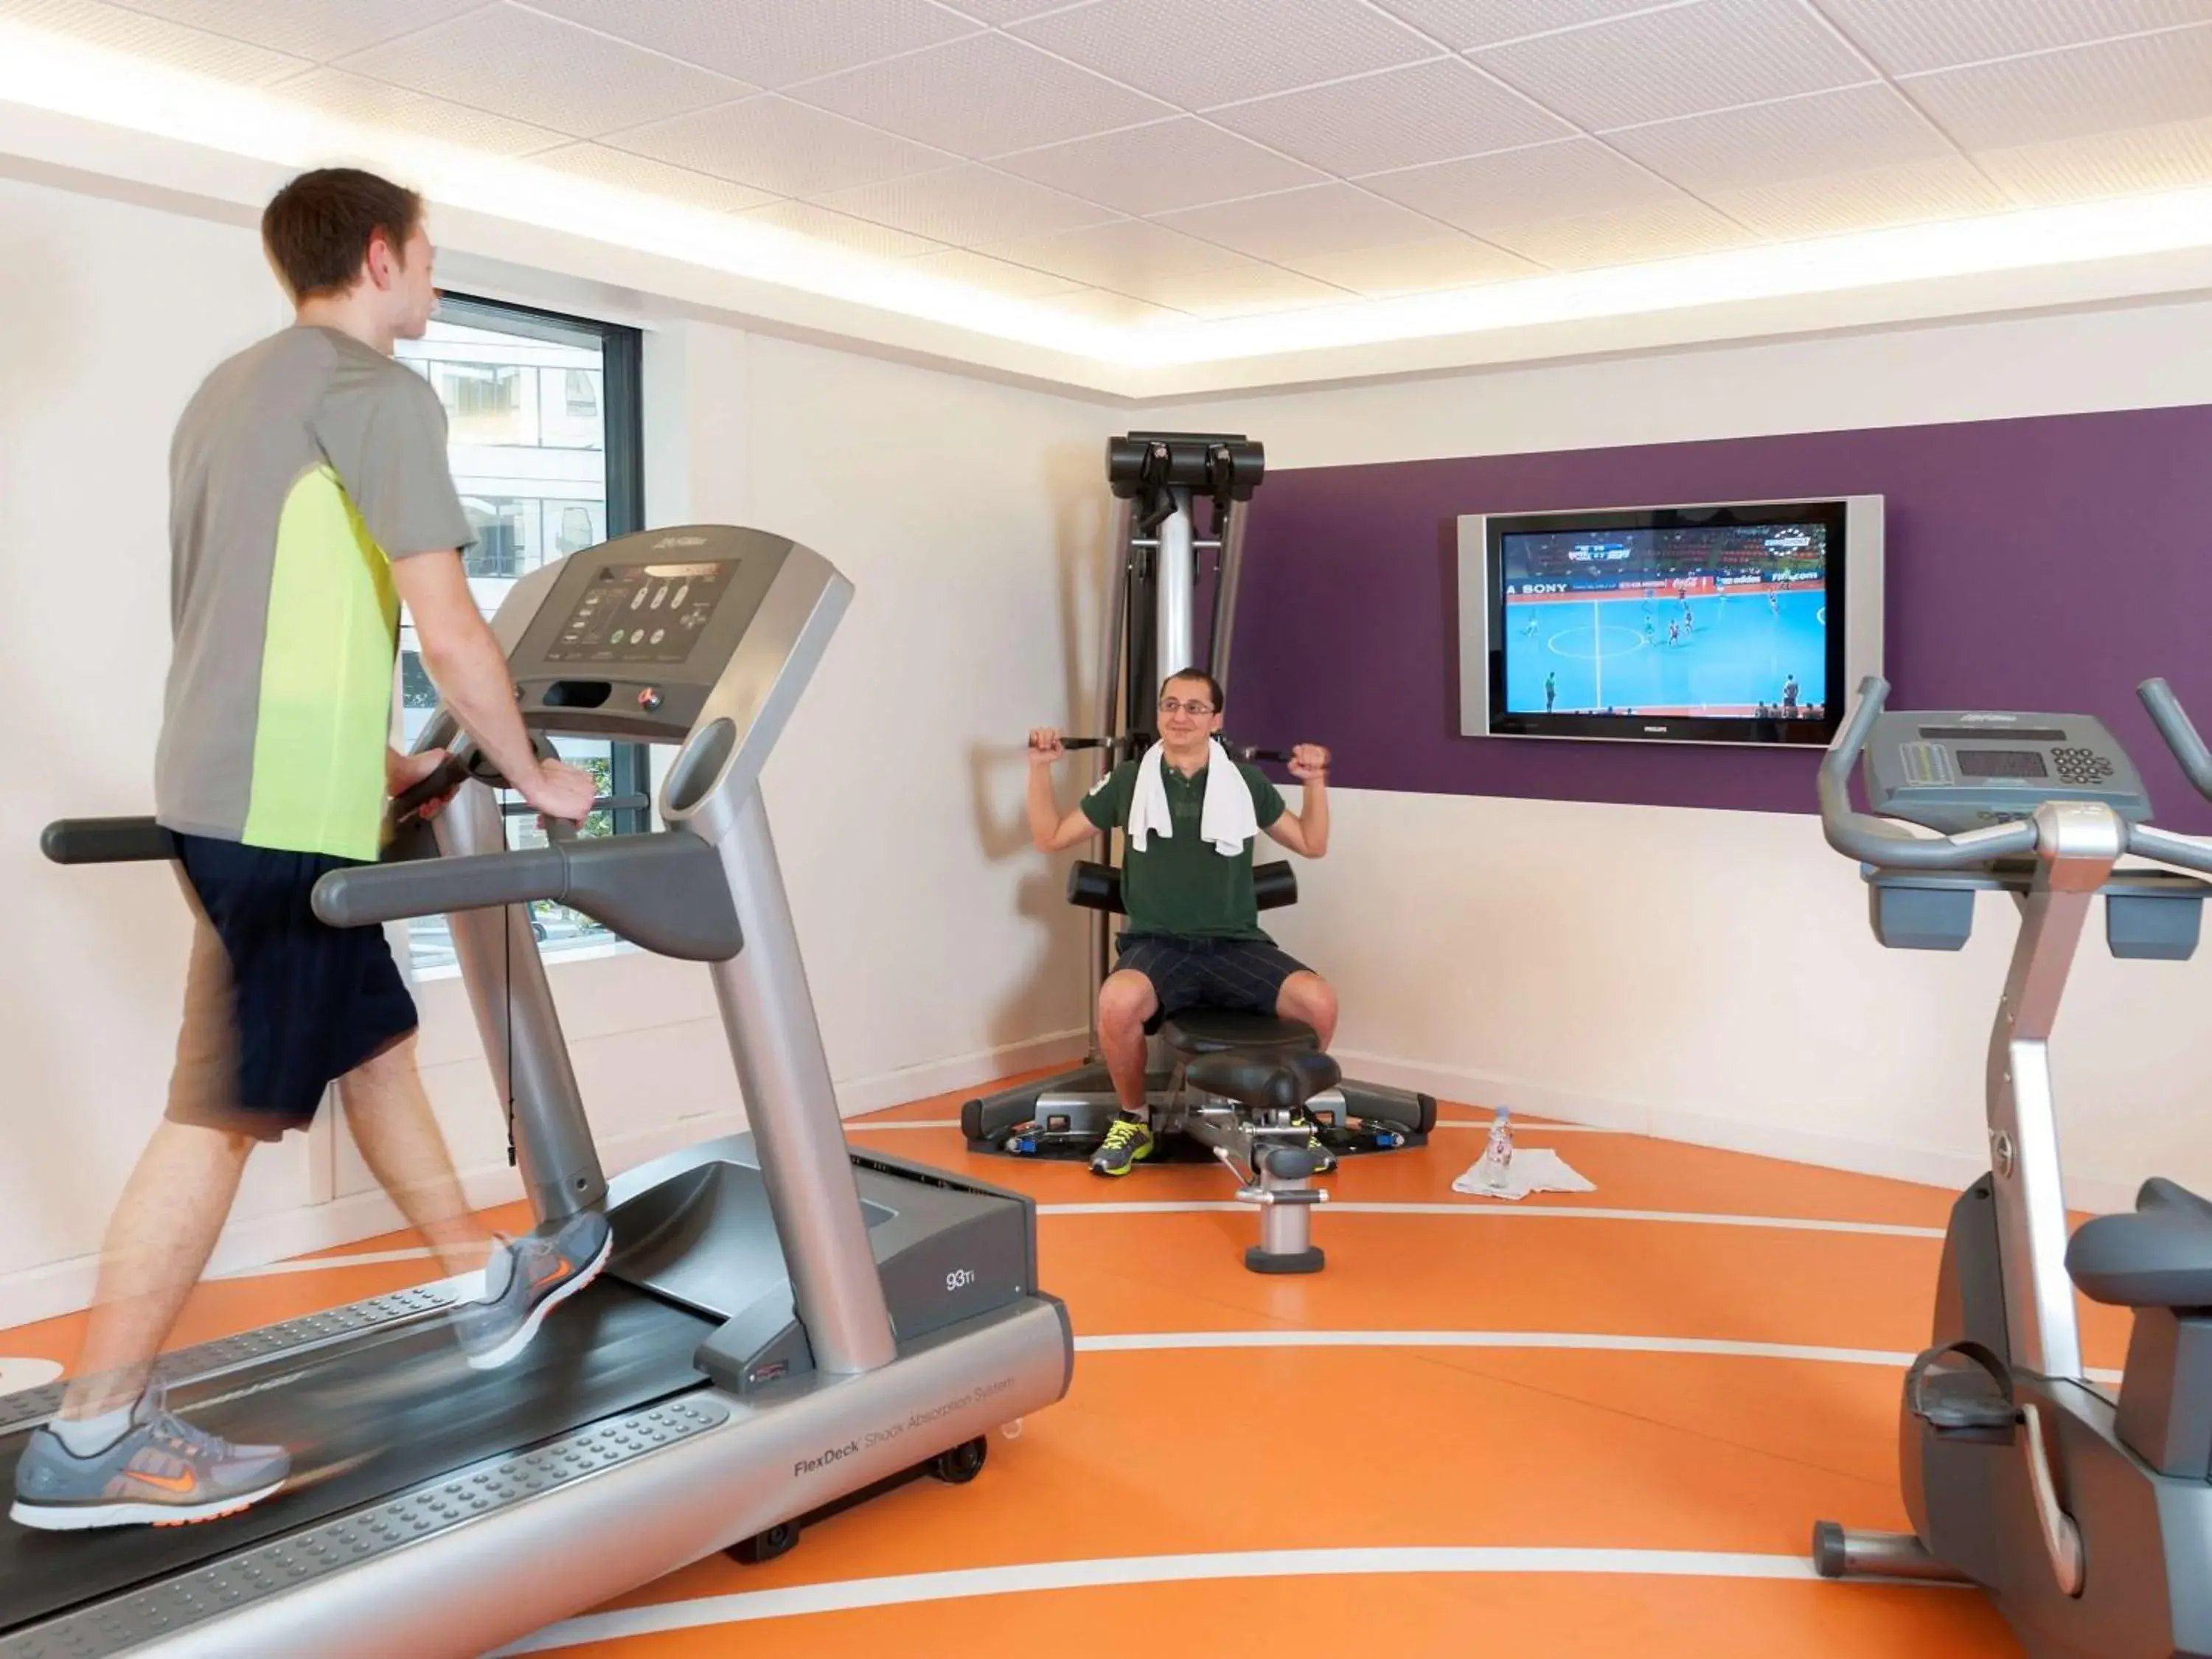 Fitness centre/facilities, Fitness Center/Facilities in Novotel Paris Saclay